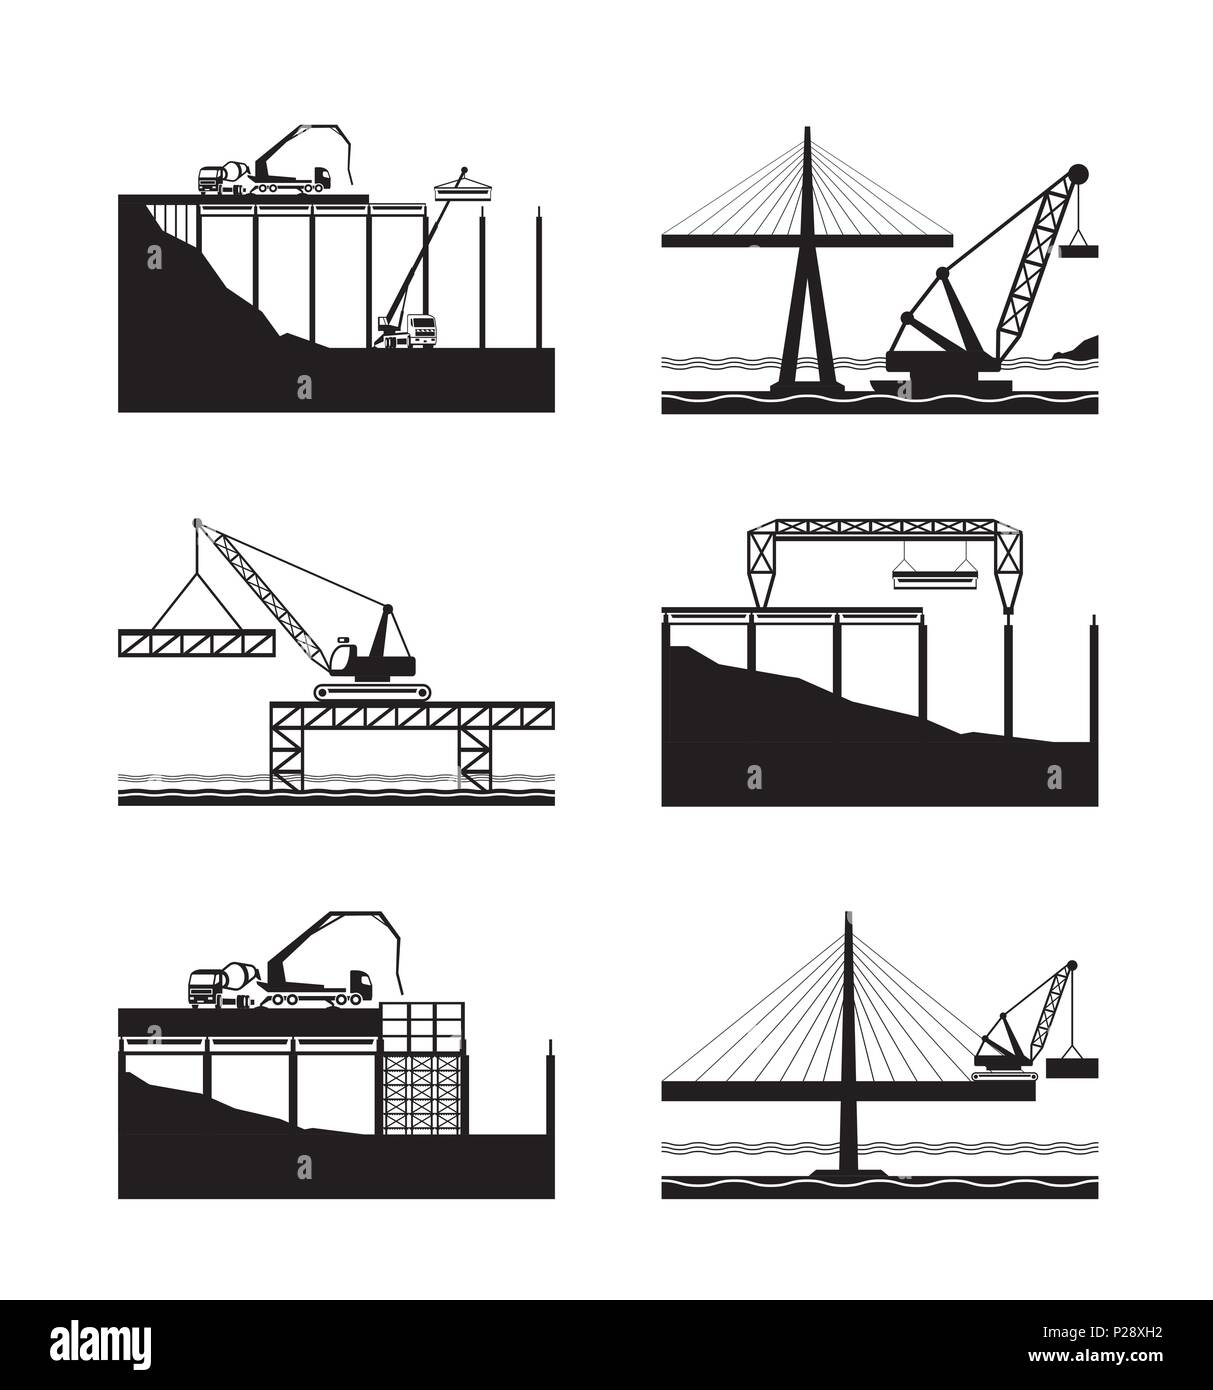 Construction of different bridges - vector illustration Stock Vector